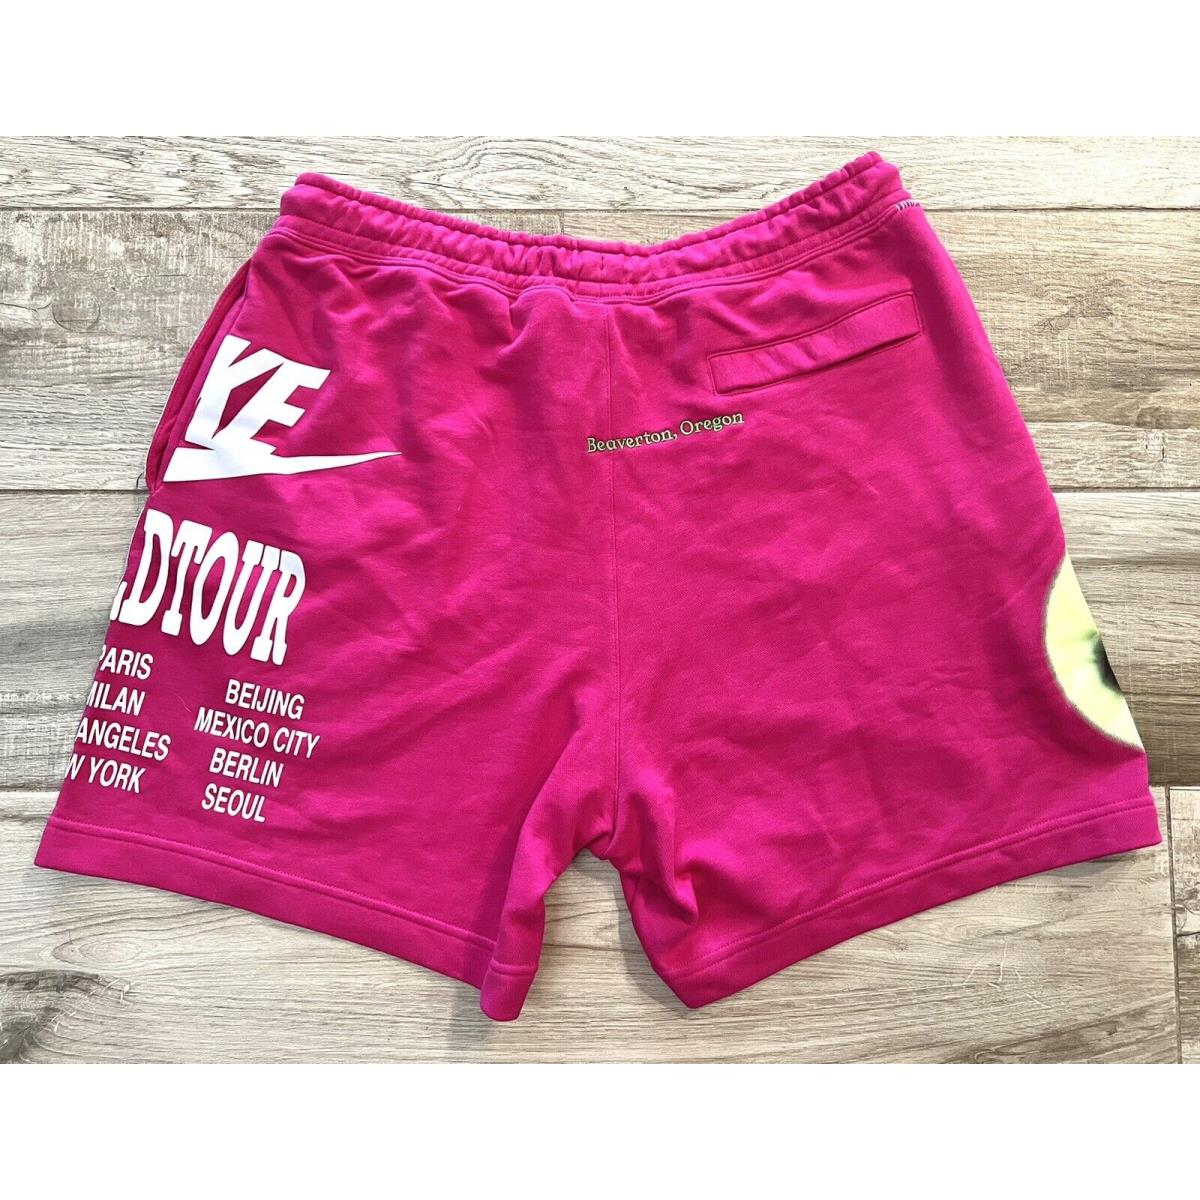 Nike Sportswear World Tour French Terry Shorts Pink DA0645 615 sz Medium